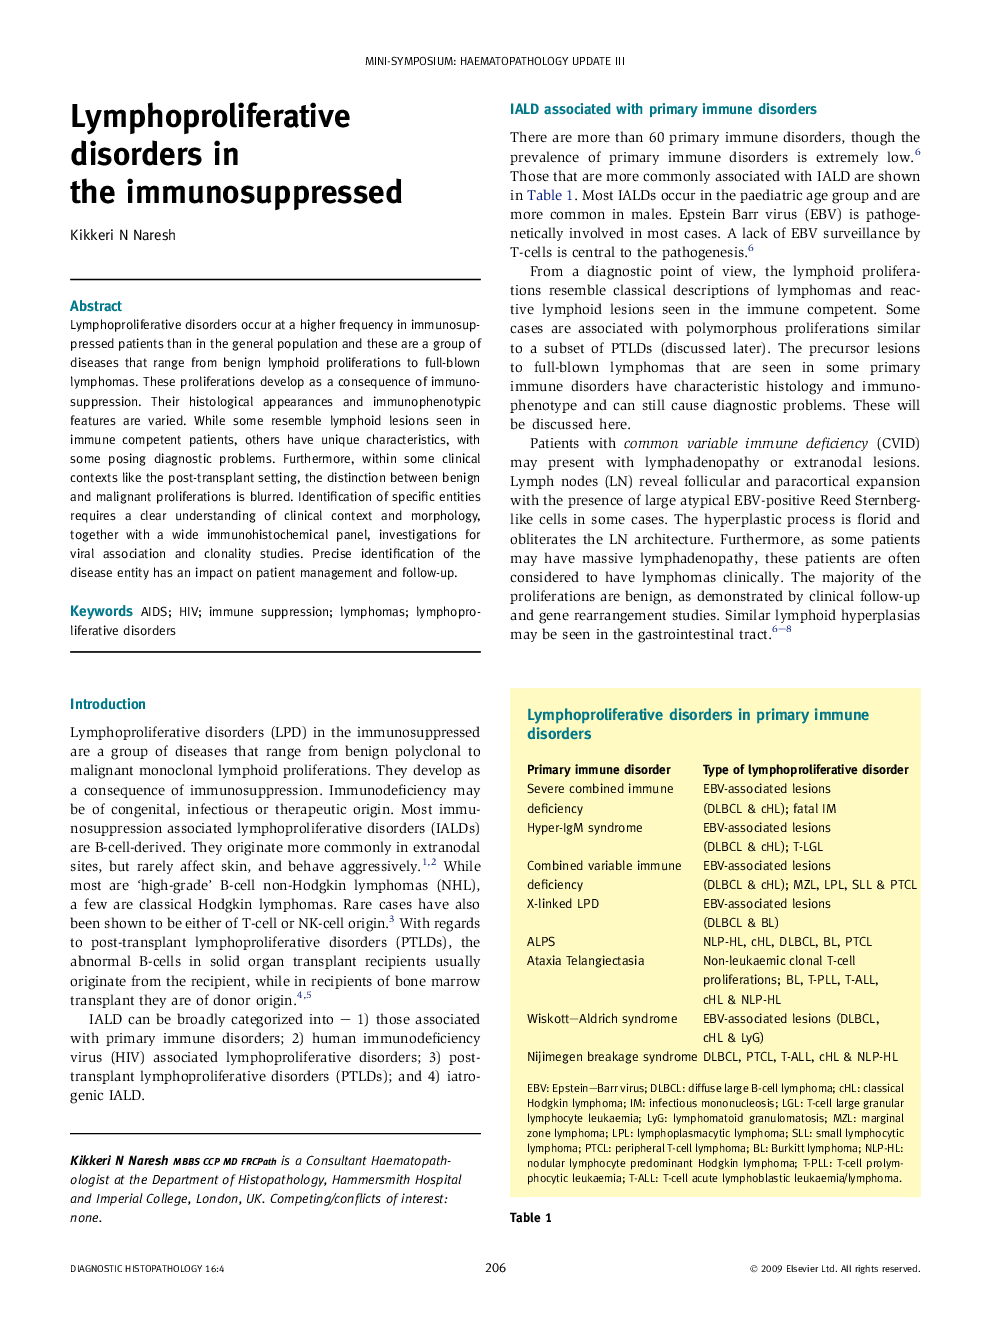 Lymphoproliferative disorders in the immunosuppressed